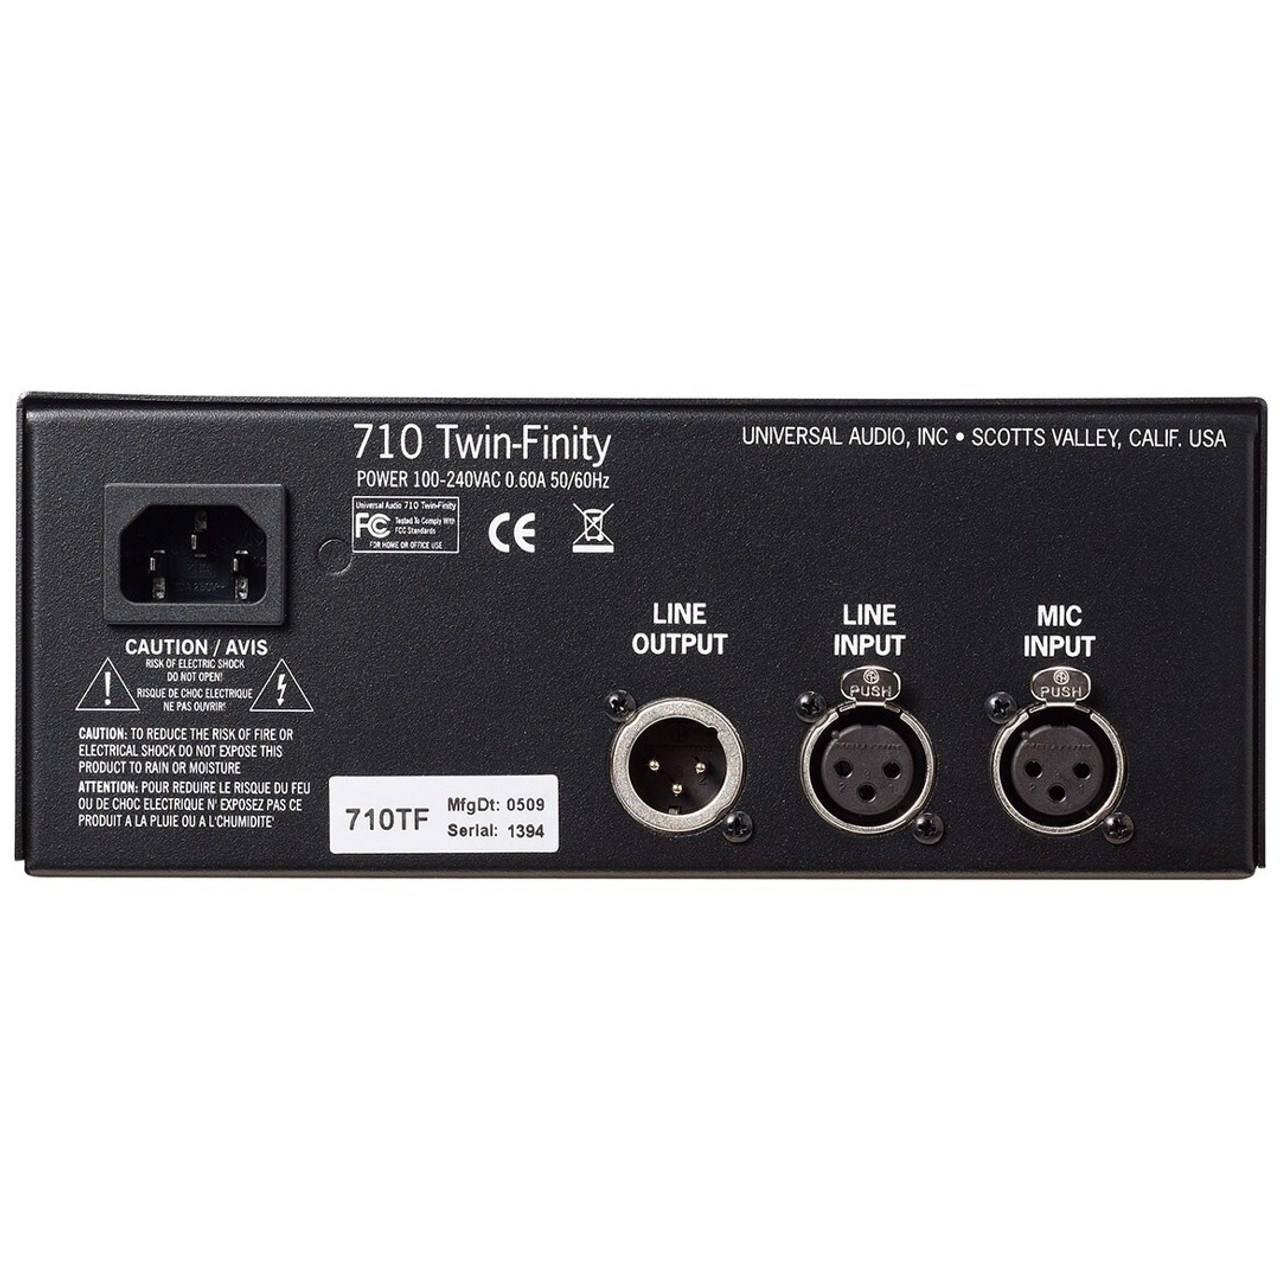 Universal Audio 710 Twin-Finity Preamp | FrontEndAudio.com